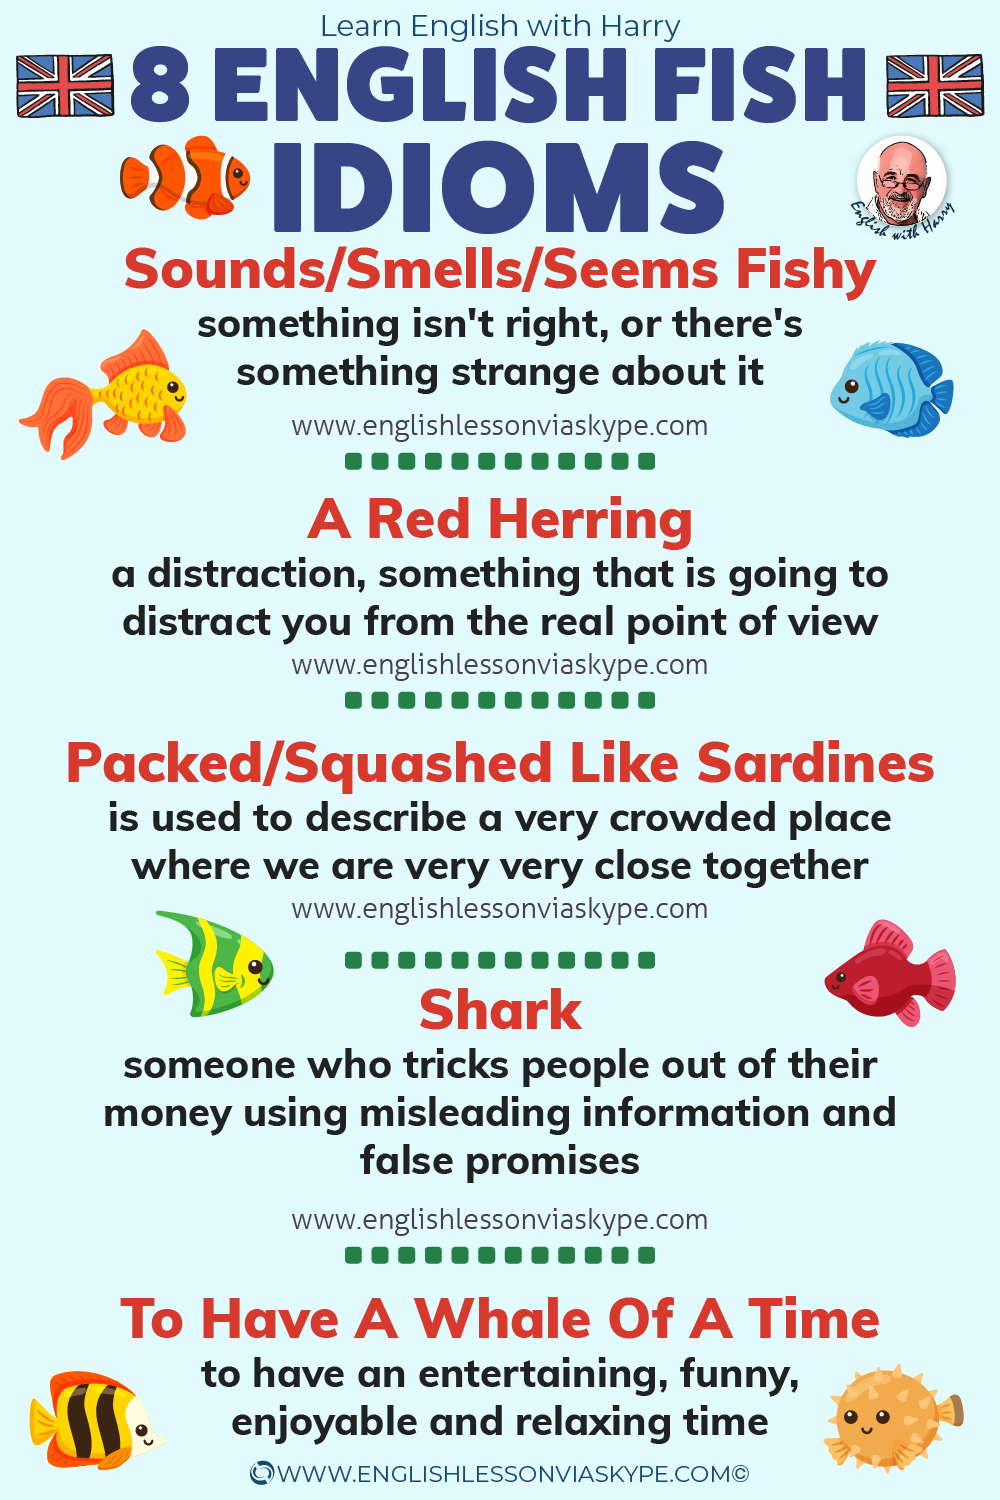 English fish idioms and phrases. Advanced English learning. Advanced English lessons at www.englishlessonviaskype.com #learnenglish #englishlessons